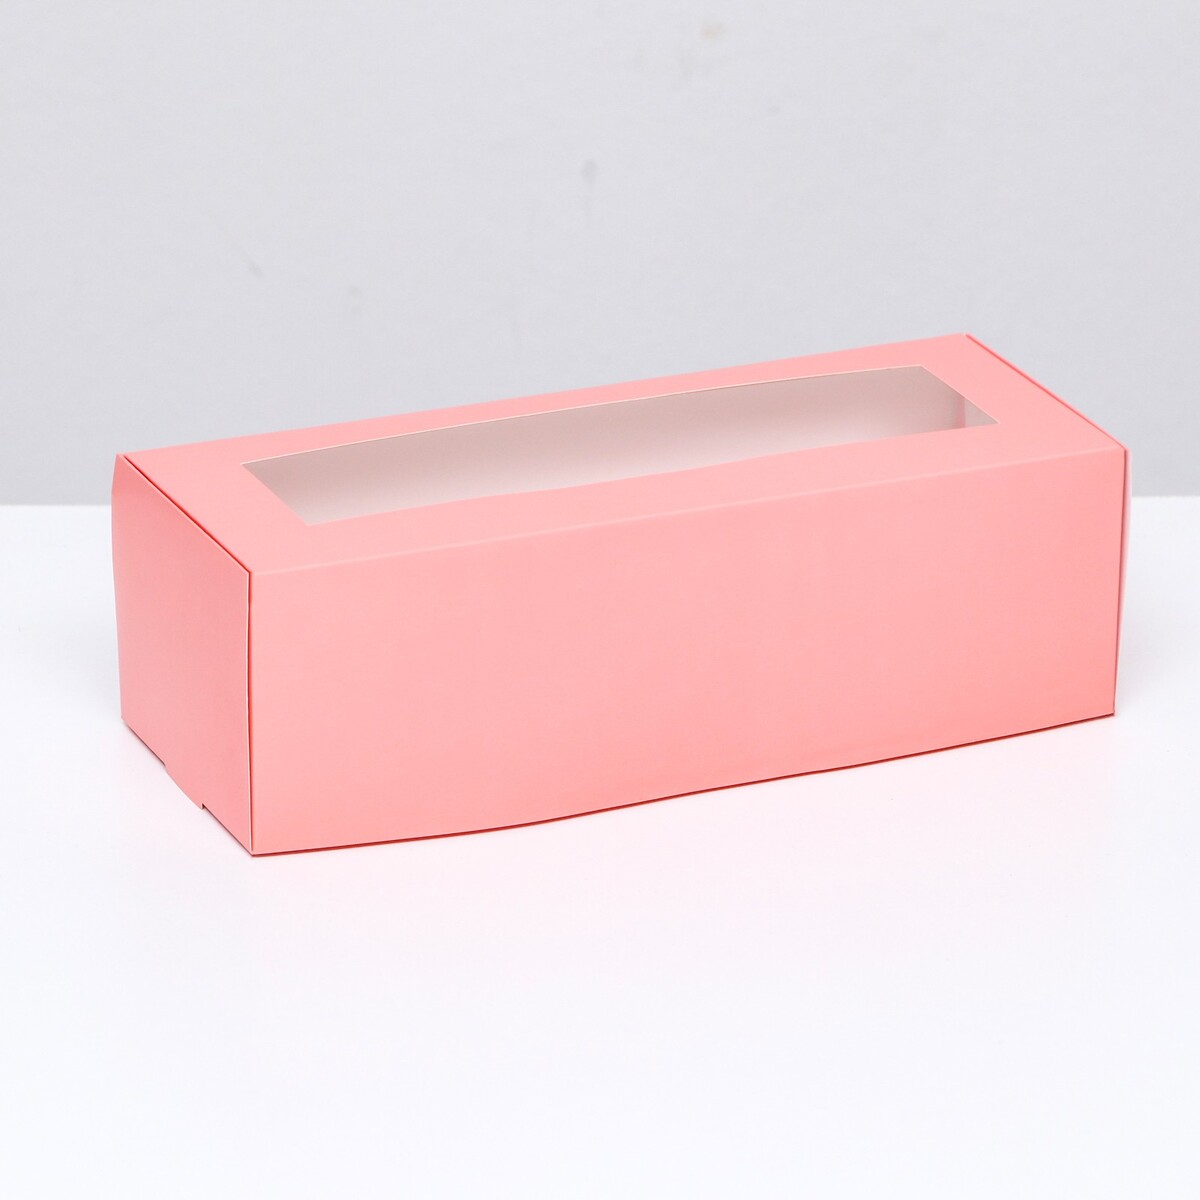 Коробка складная с окном под рулет, розовая, 26 х 10 х 8 см коробка под рулет с ручками белая 27 5 х 11 х 10 см